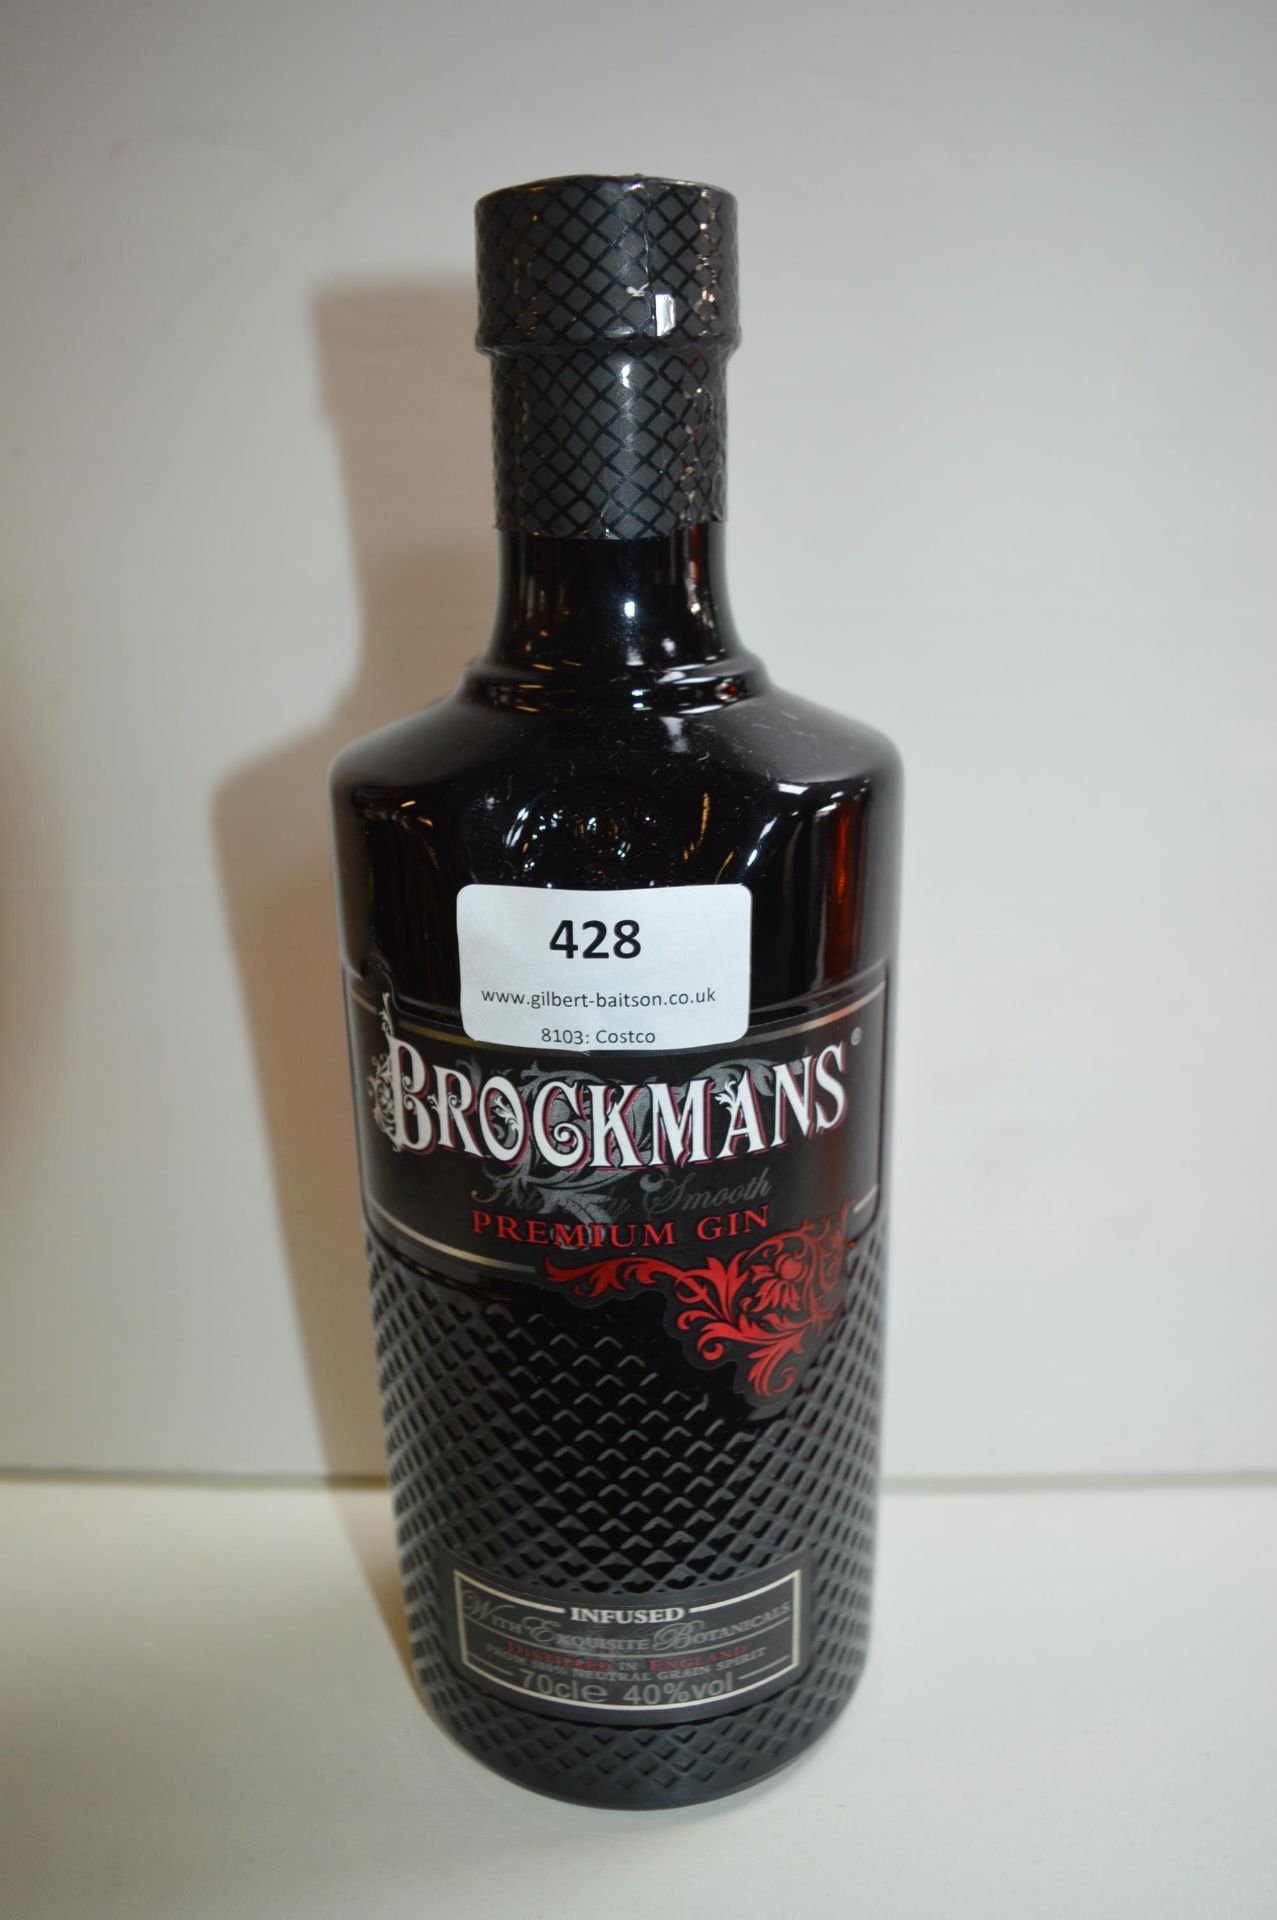 Bottle of Brockman's Smooth Premium Gin